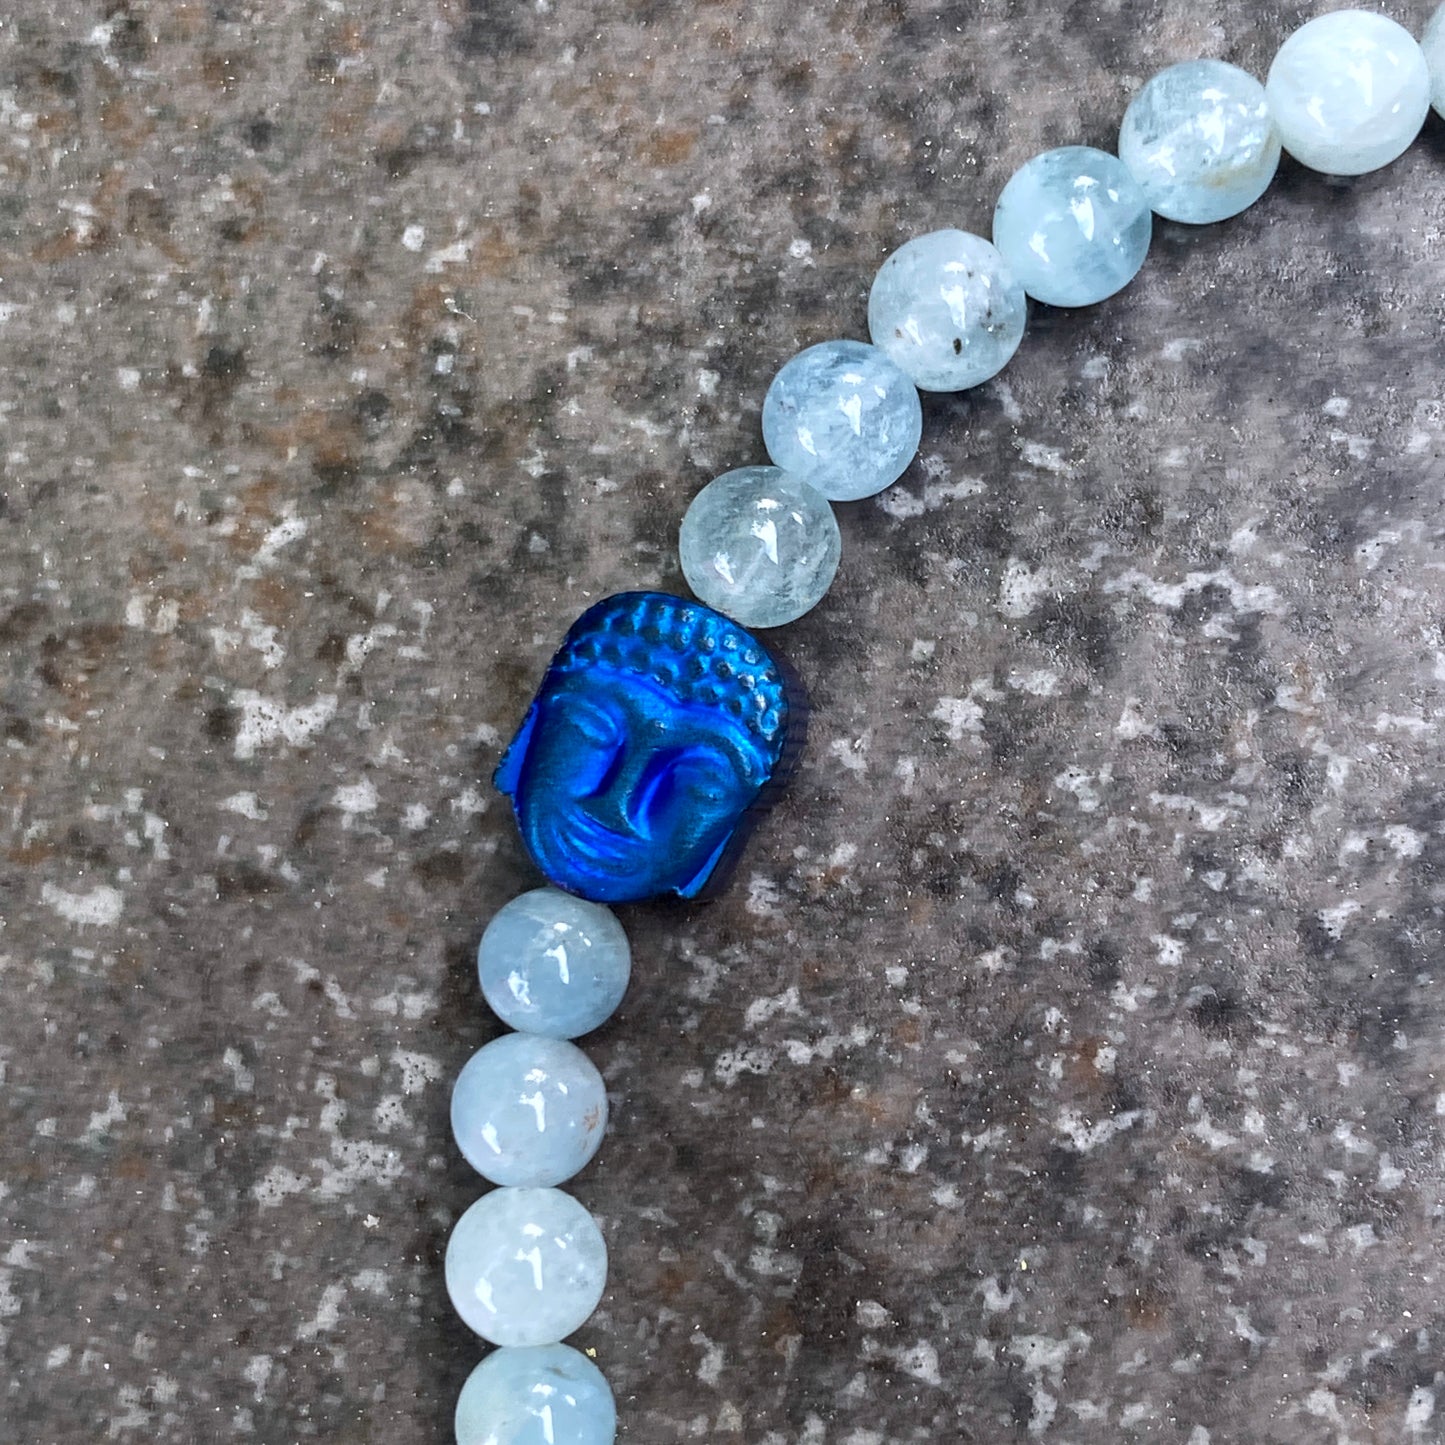 Aquamarine and Buddha Stretch bracelet